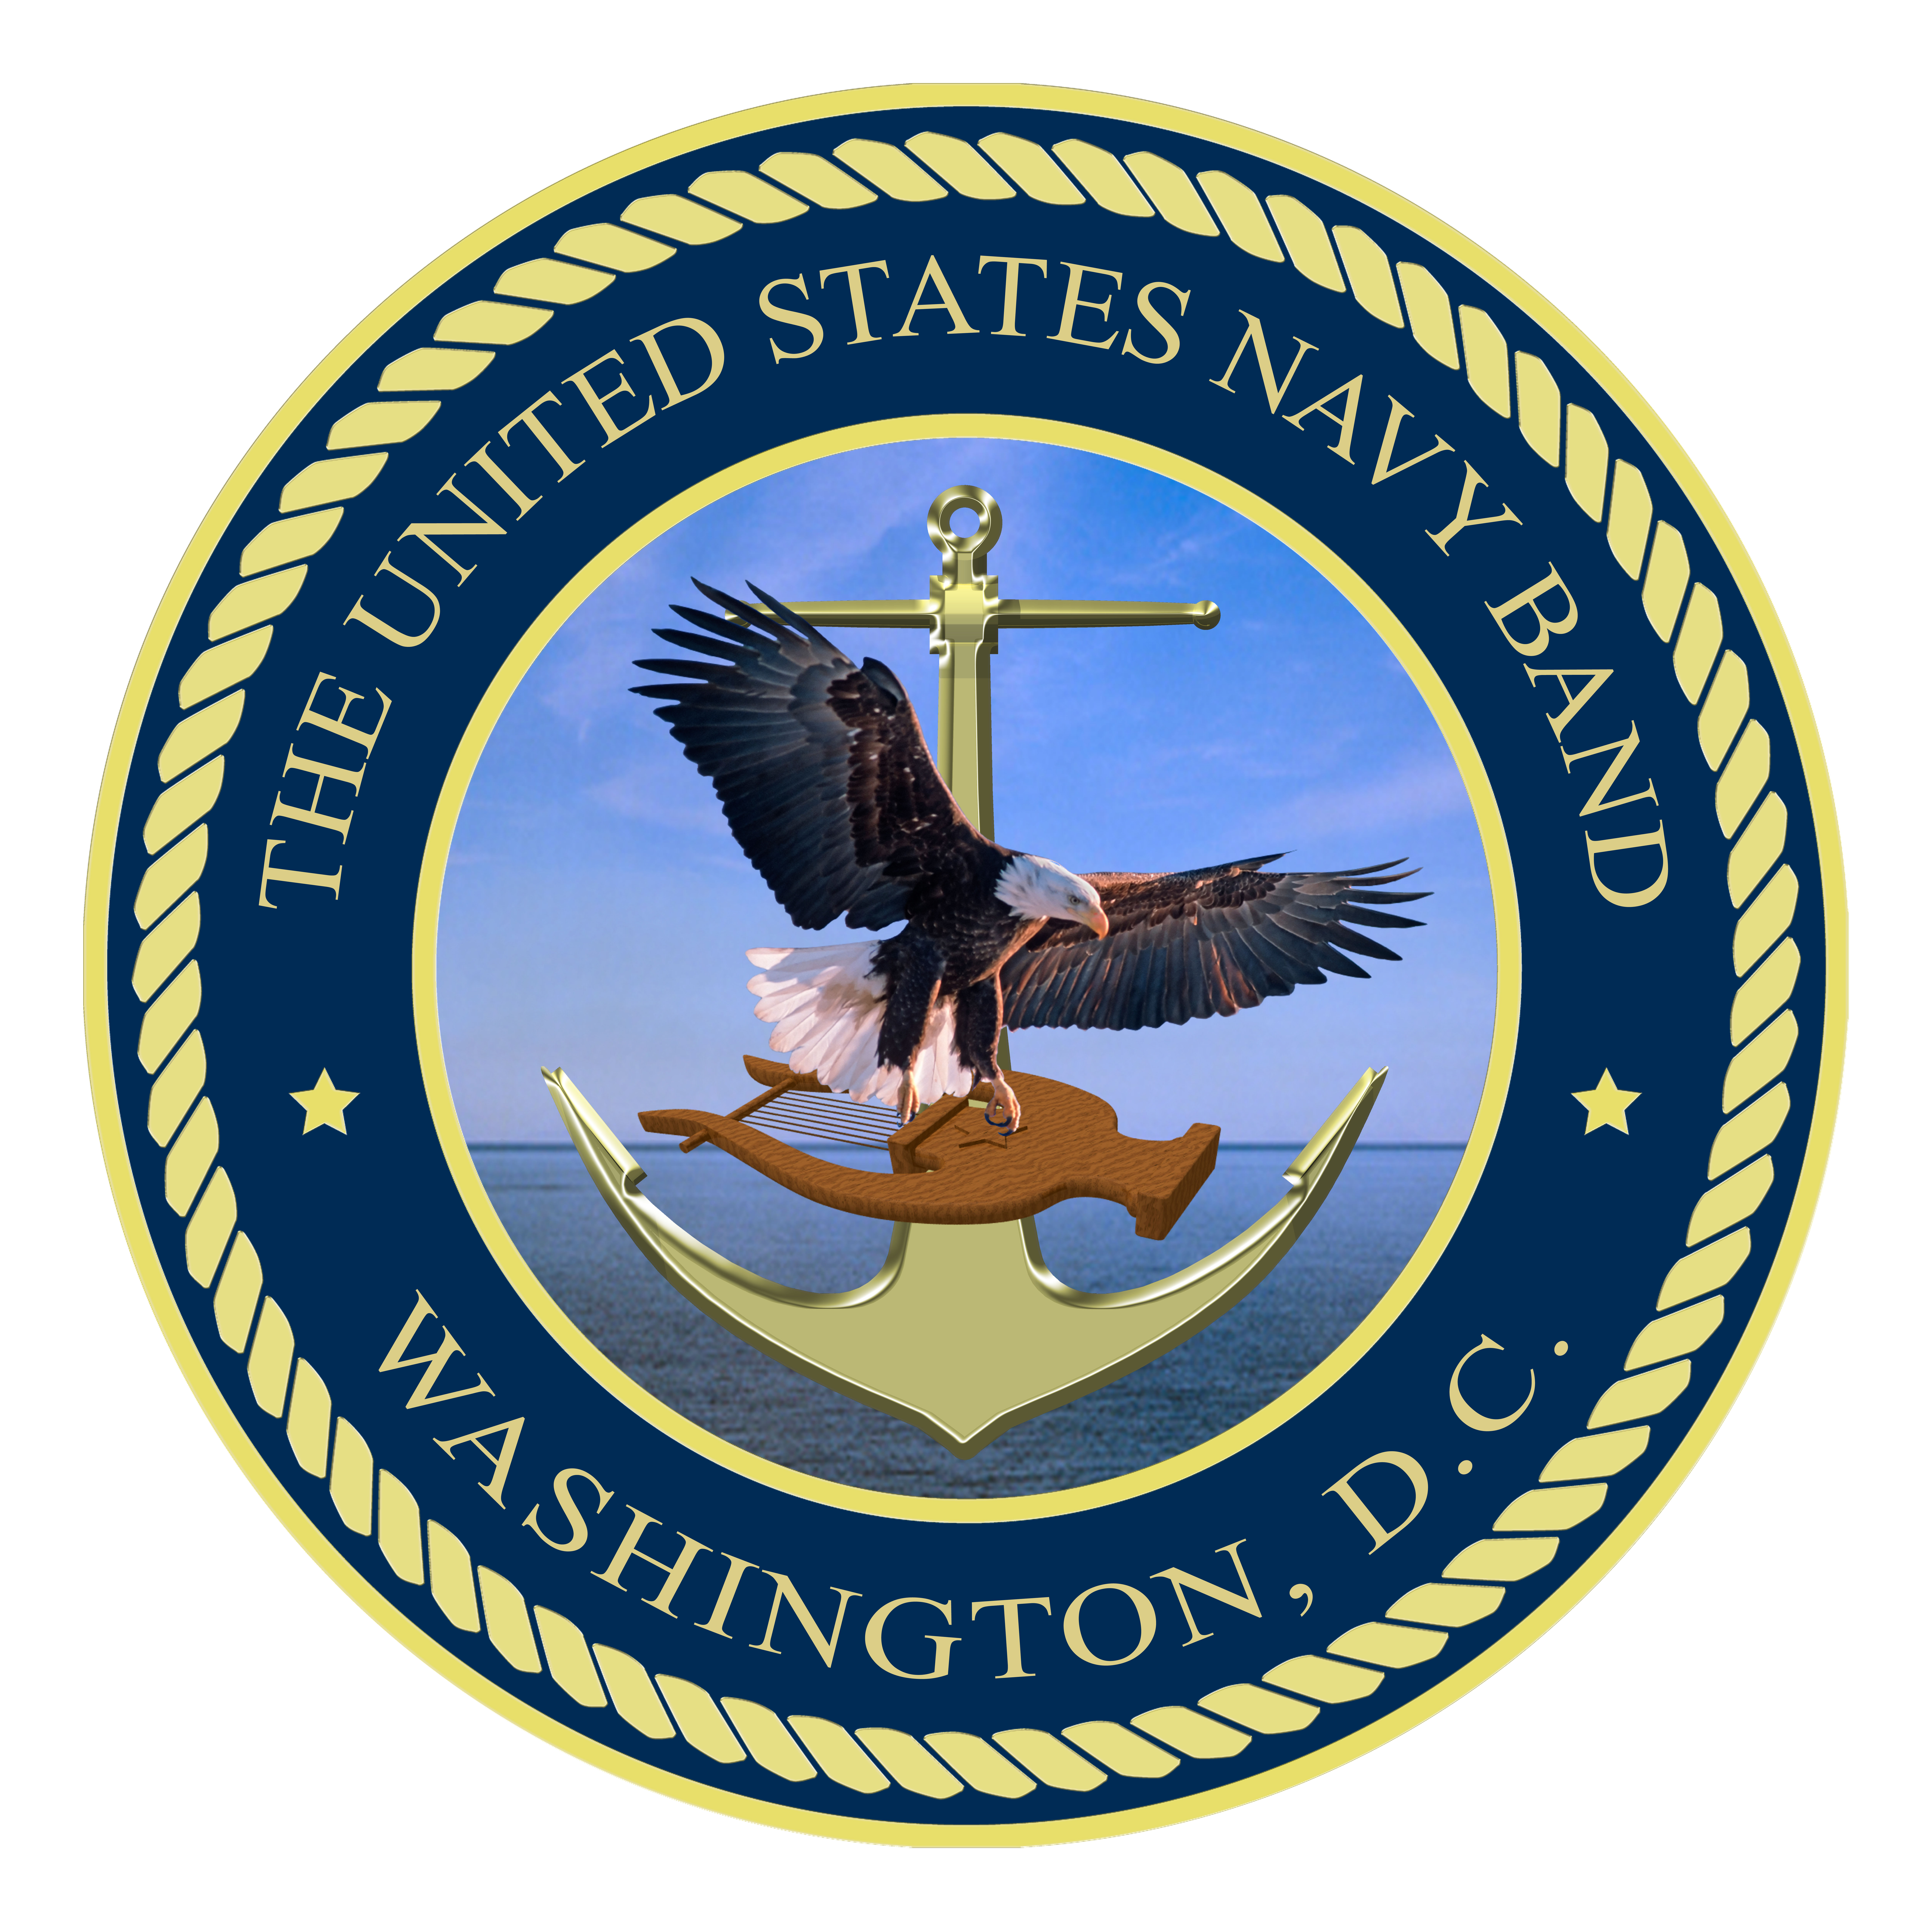 United States Navy Band - Wikipedia